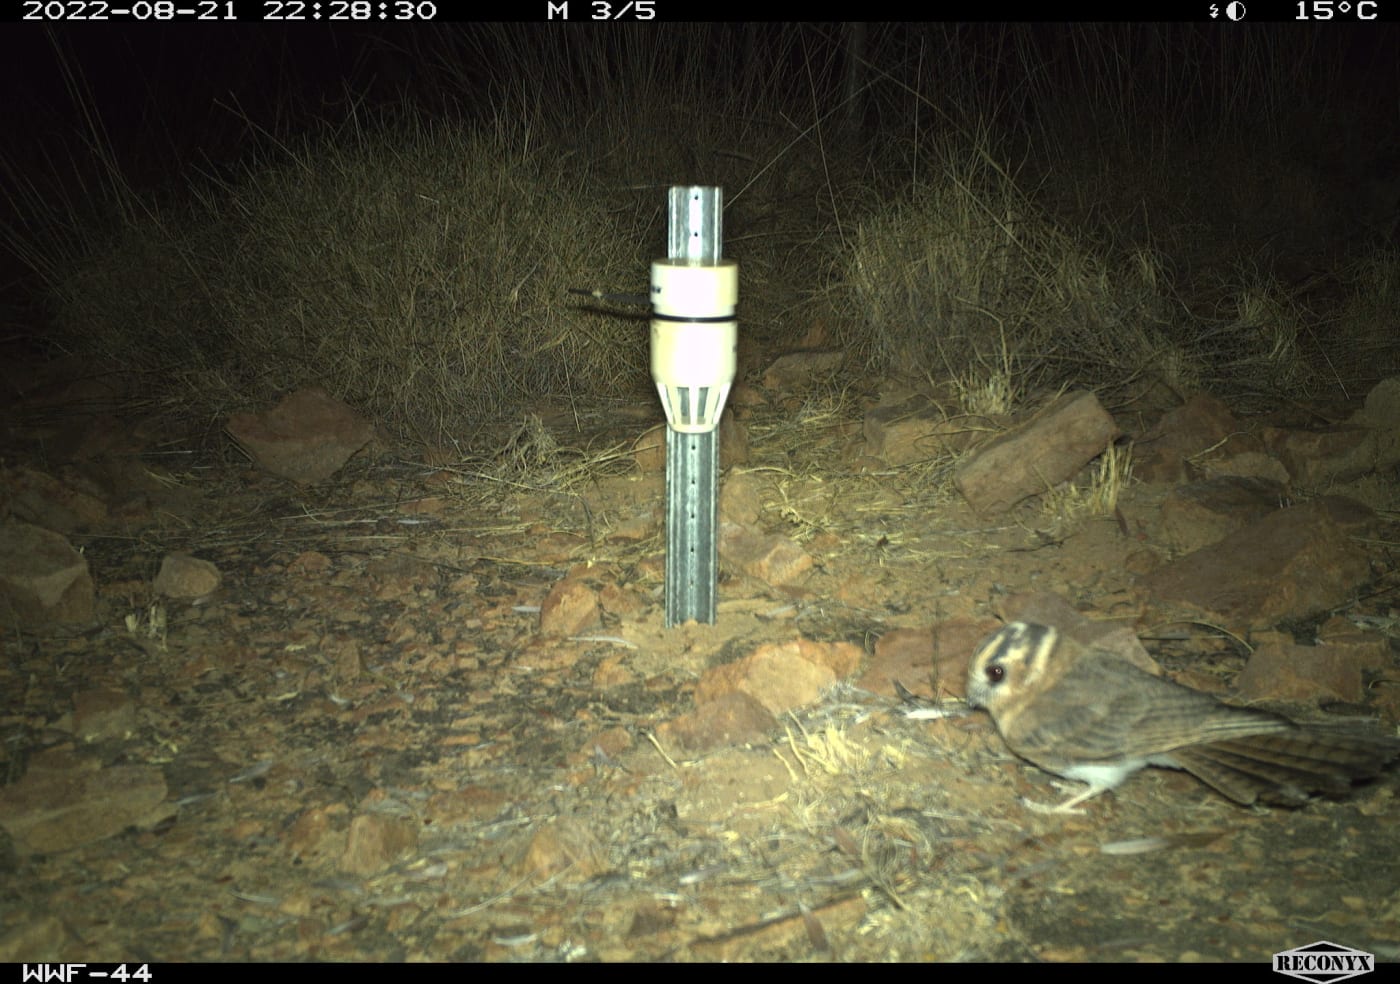 Australian owlet-nightjar (Aegotheles cristatus)
Wilinggin IPA (Karunjie/Durack)